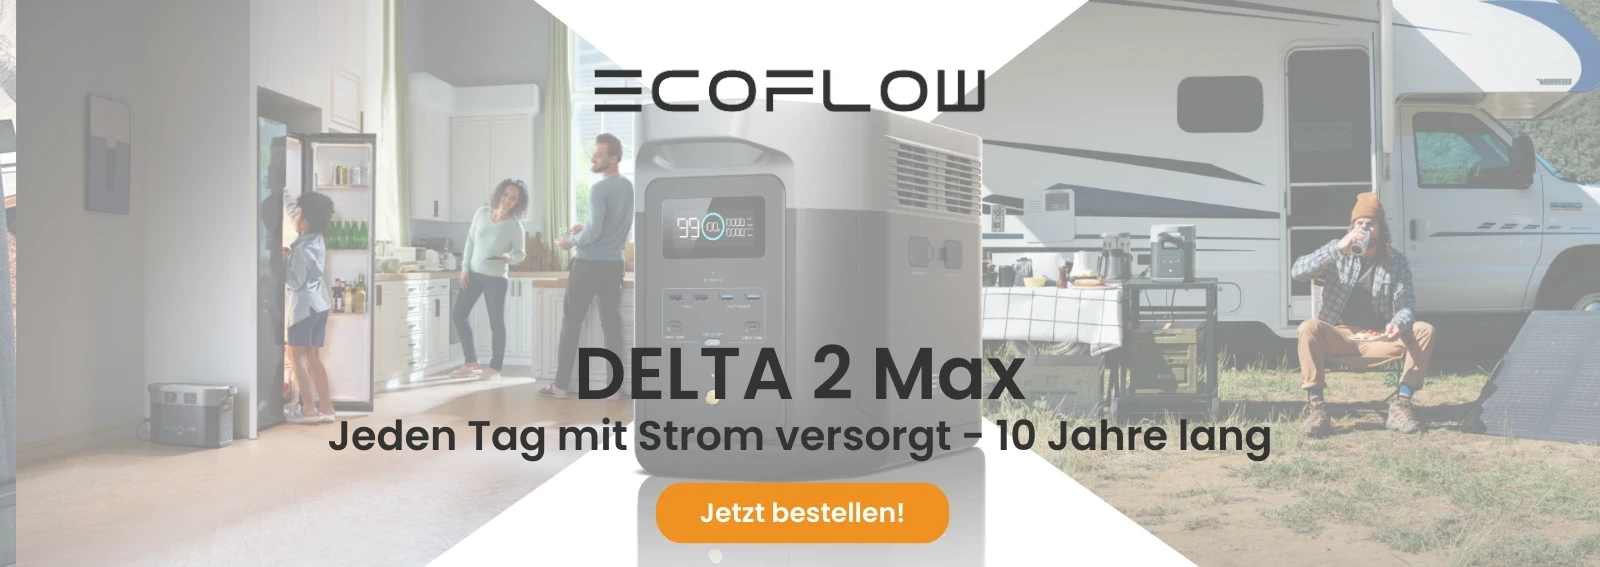 EcoFlow Delta Max 2 Neuheit